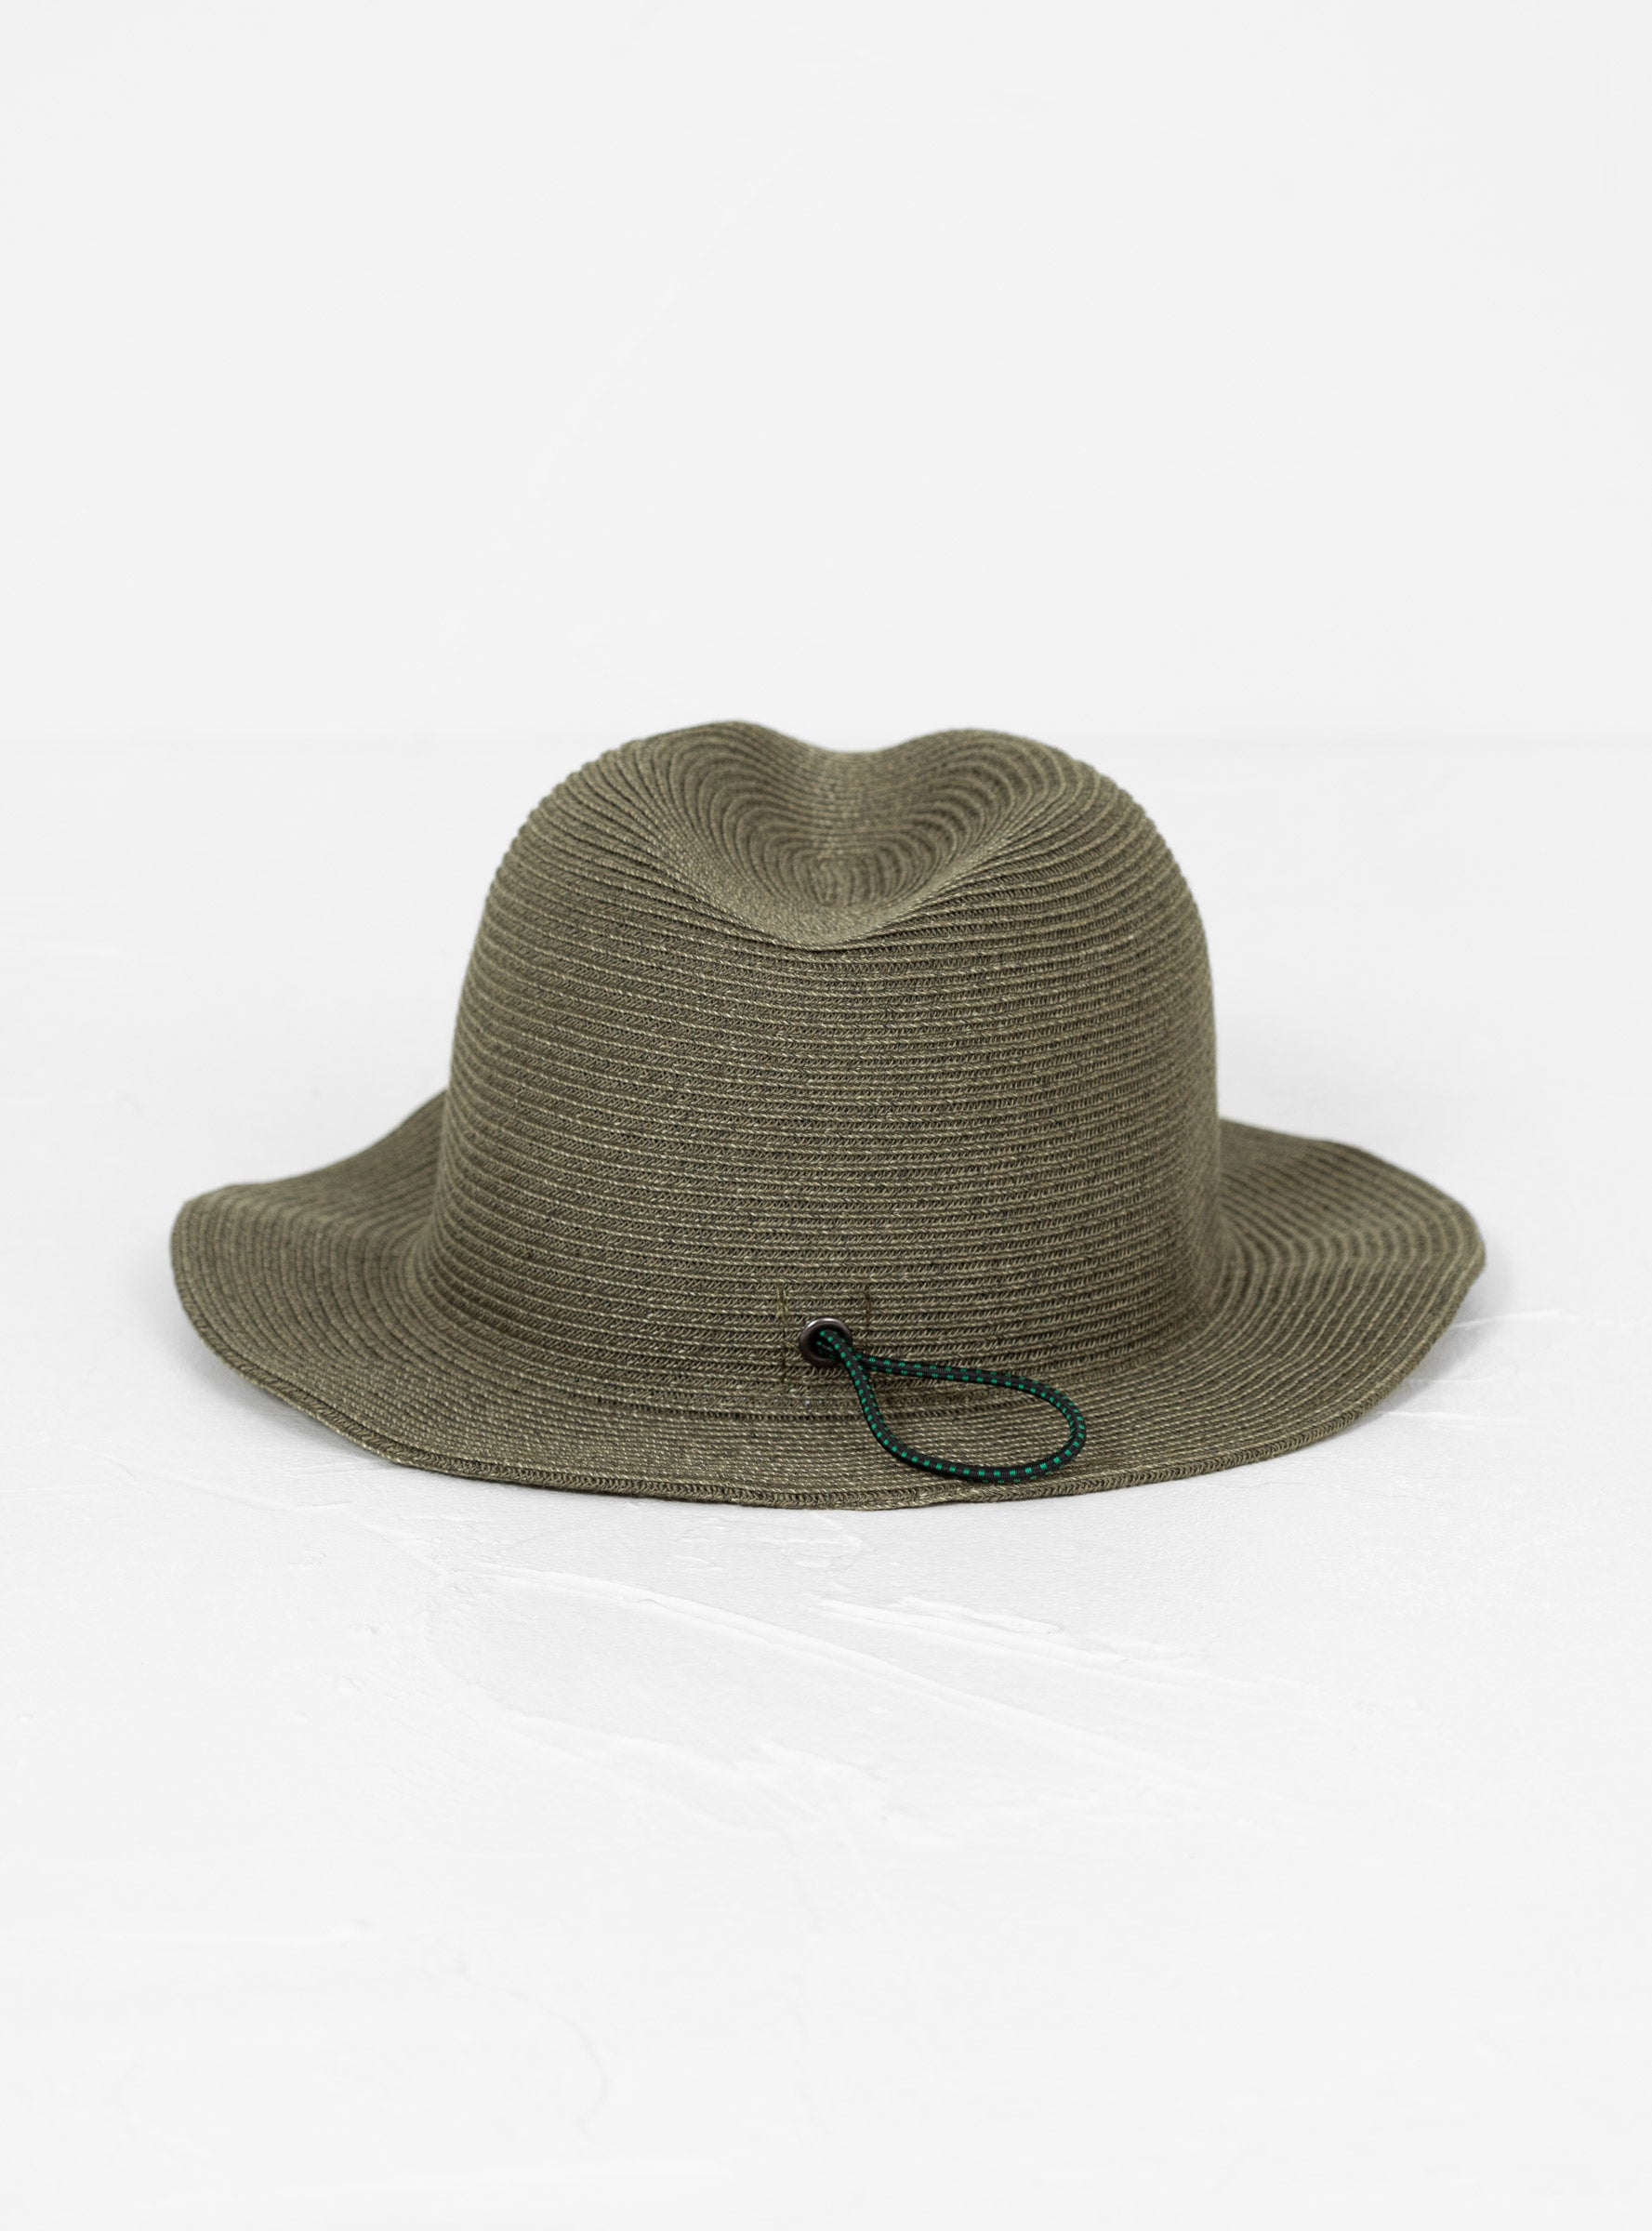  Sublime Packable Travel Hat Olive